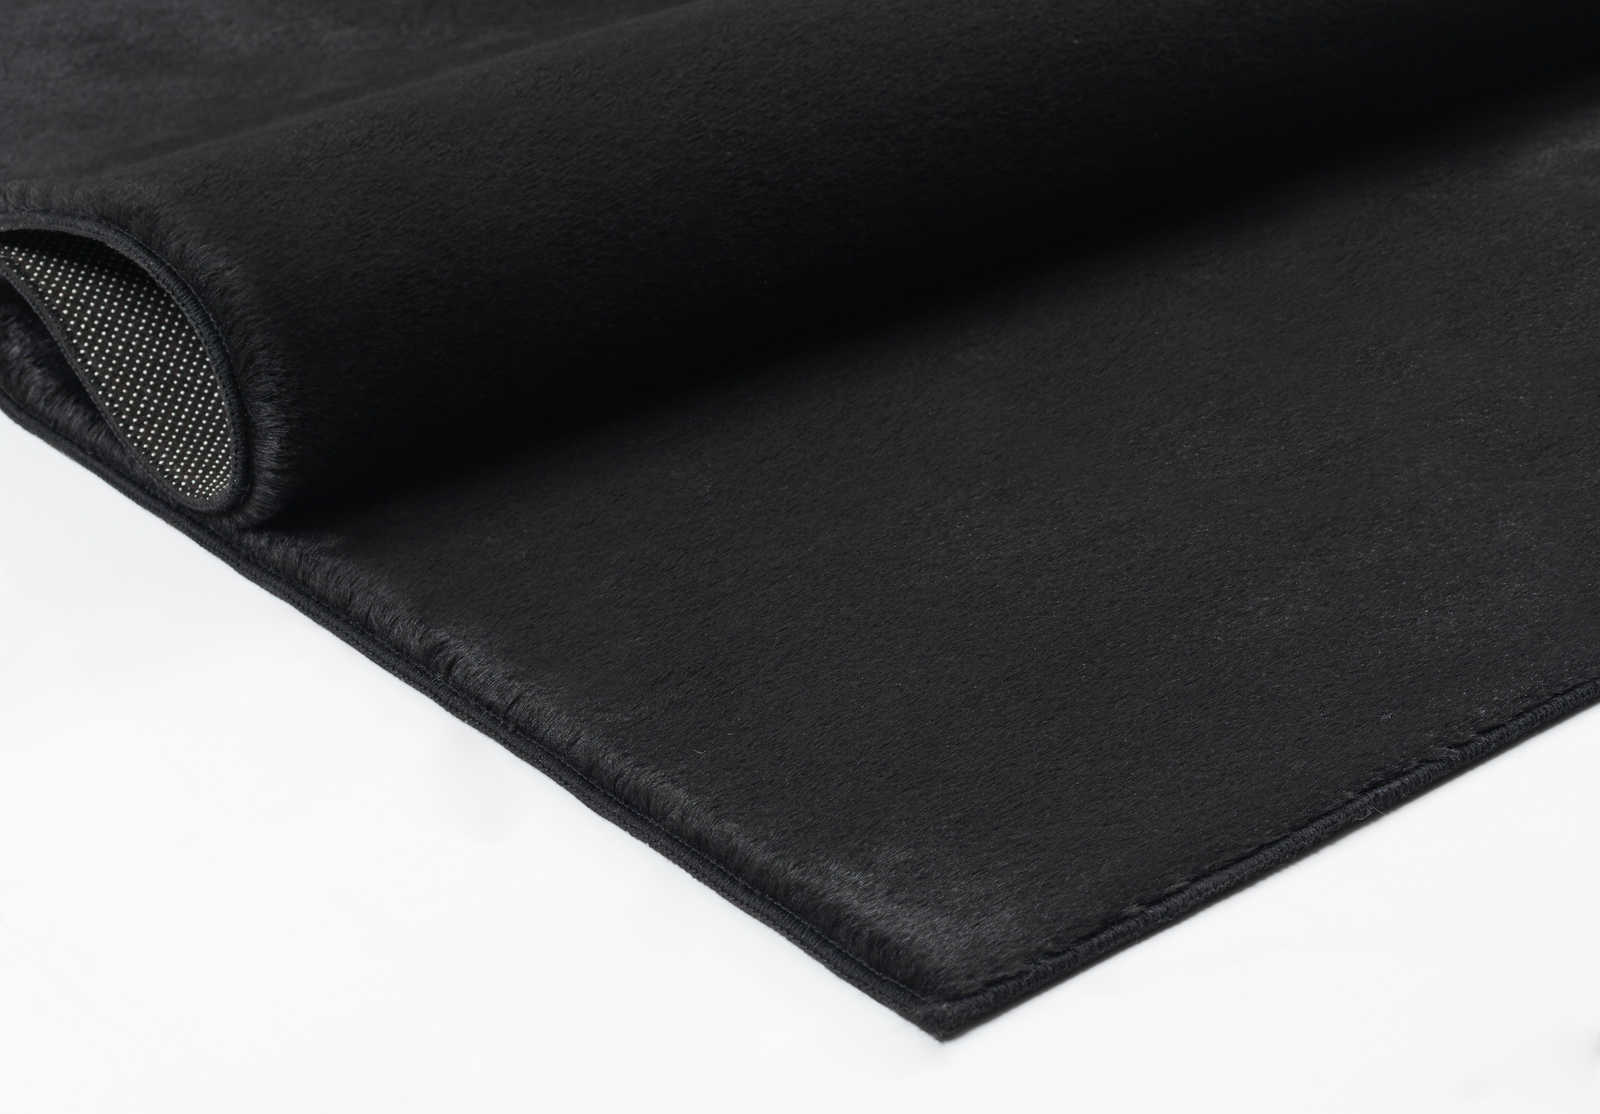             Cuddly soft high pile carpet in black - 100 x 50 cm
        